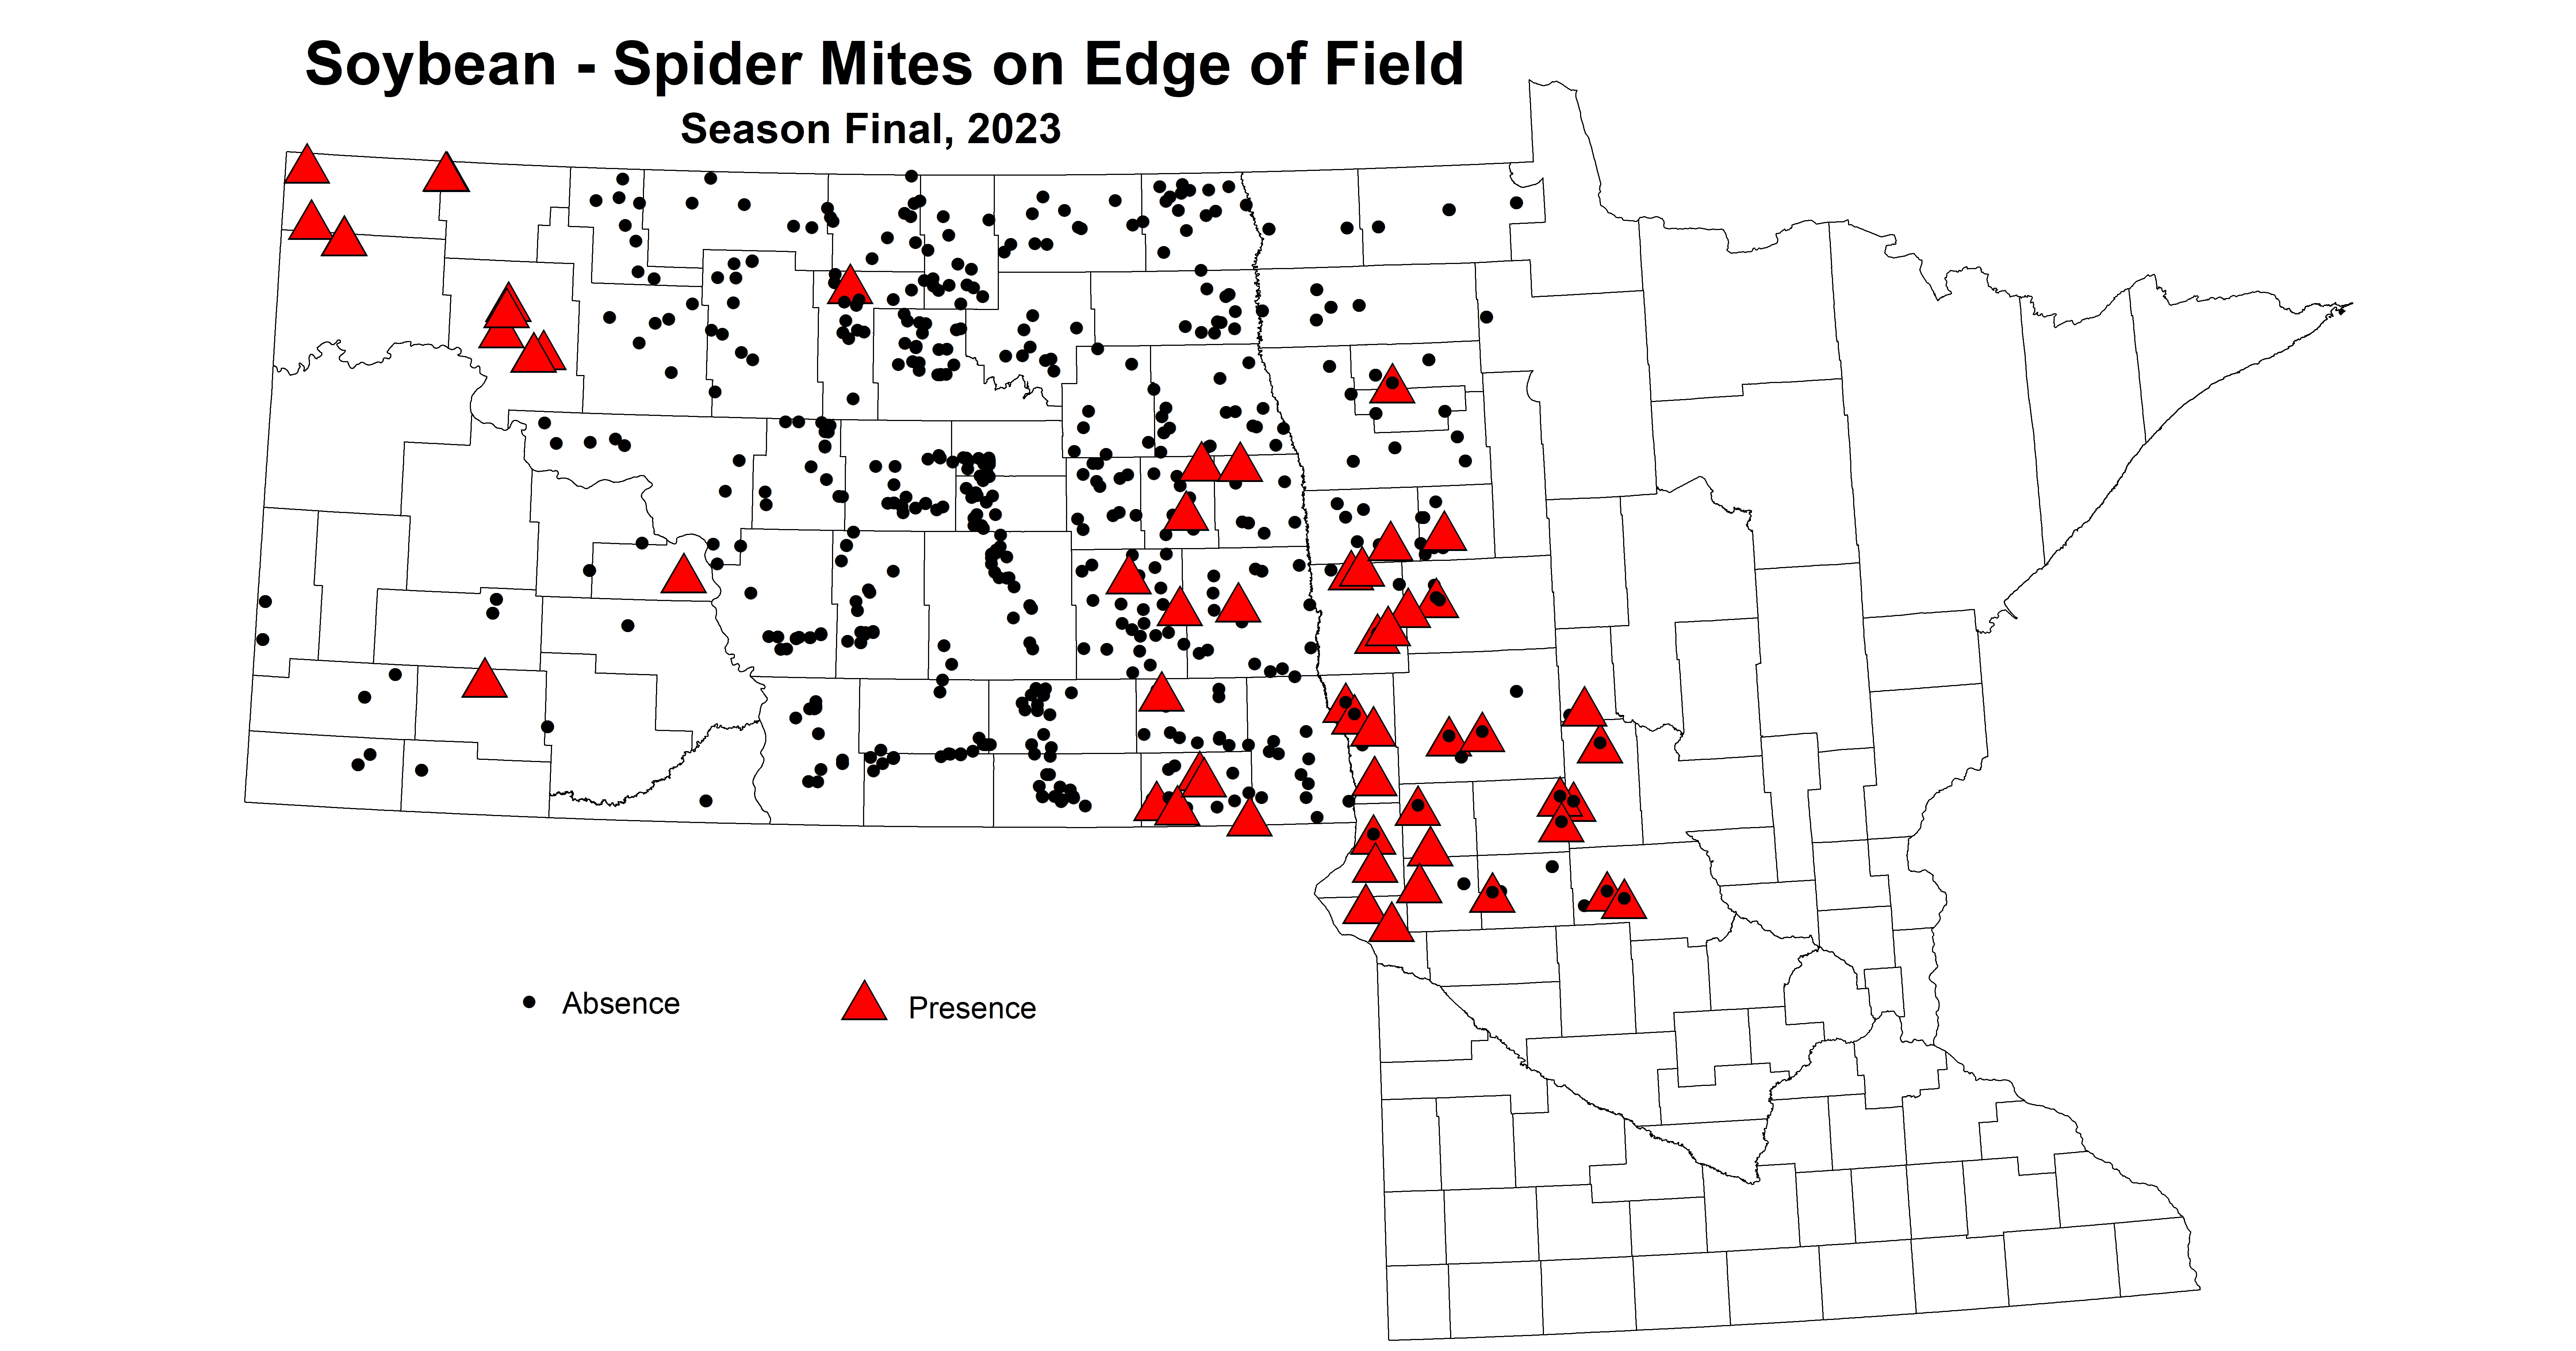 soybean spider mites on edge of field season final 2023